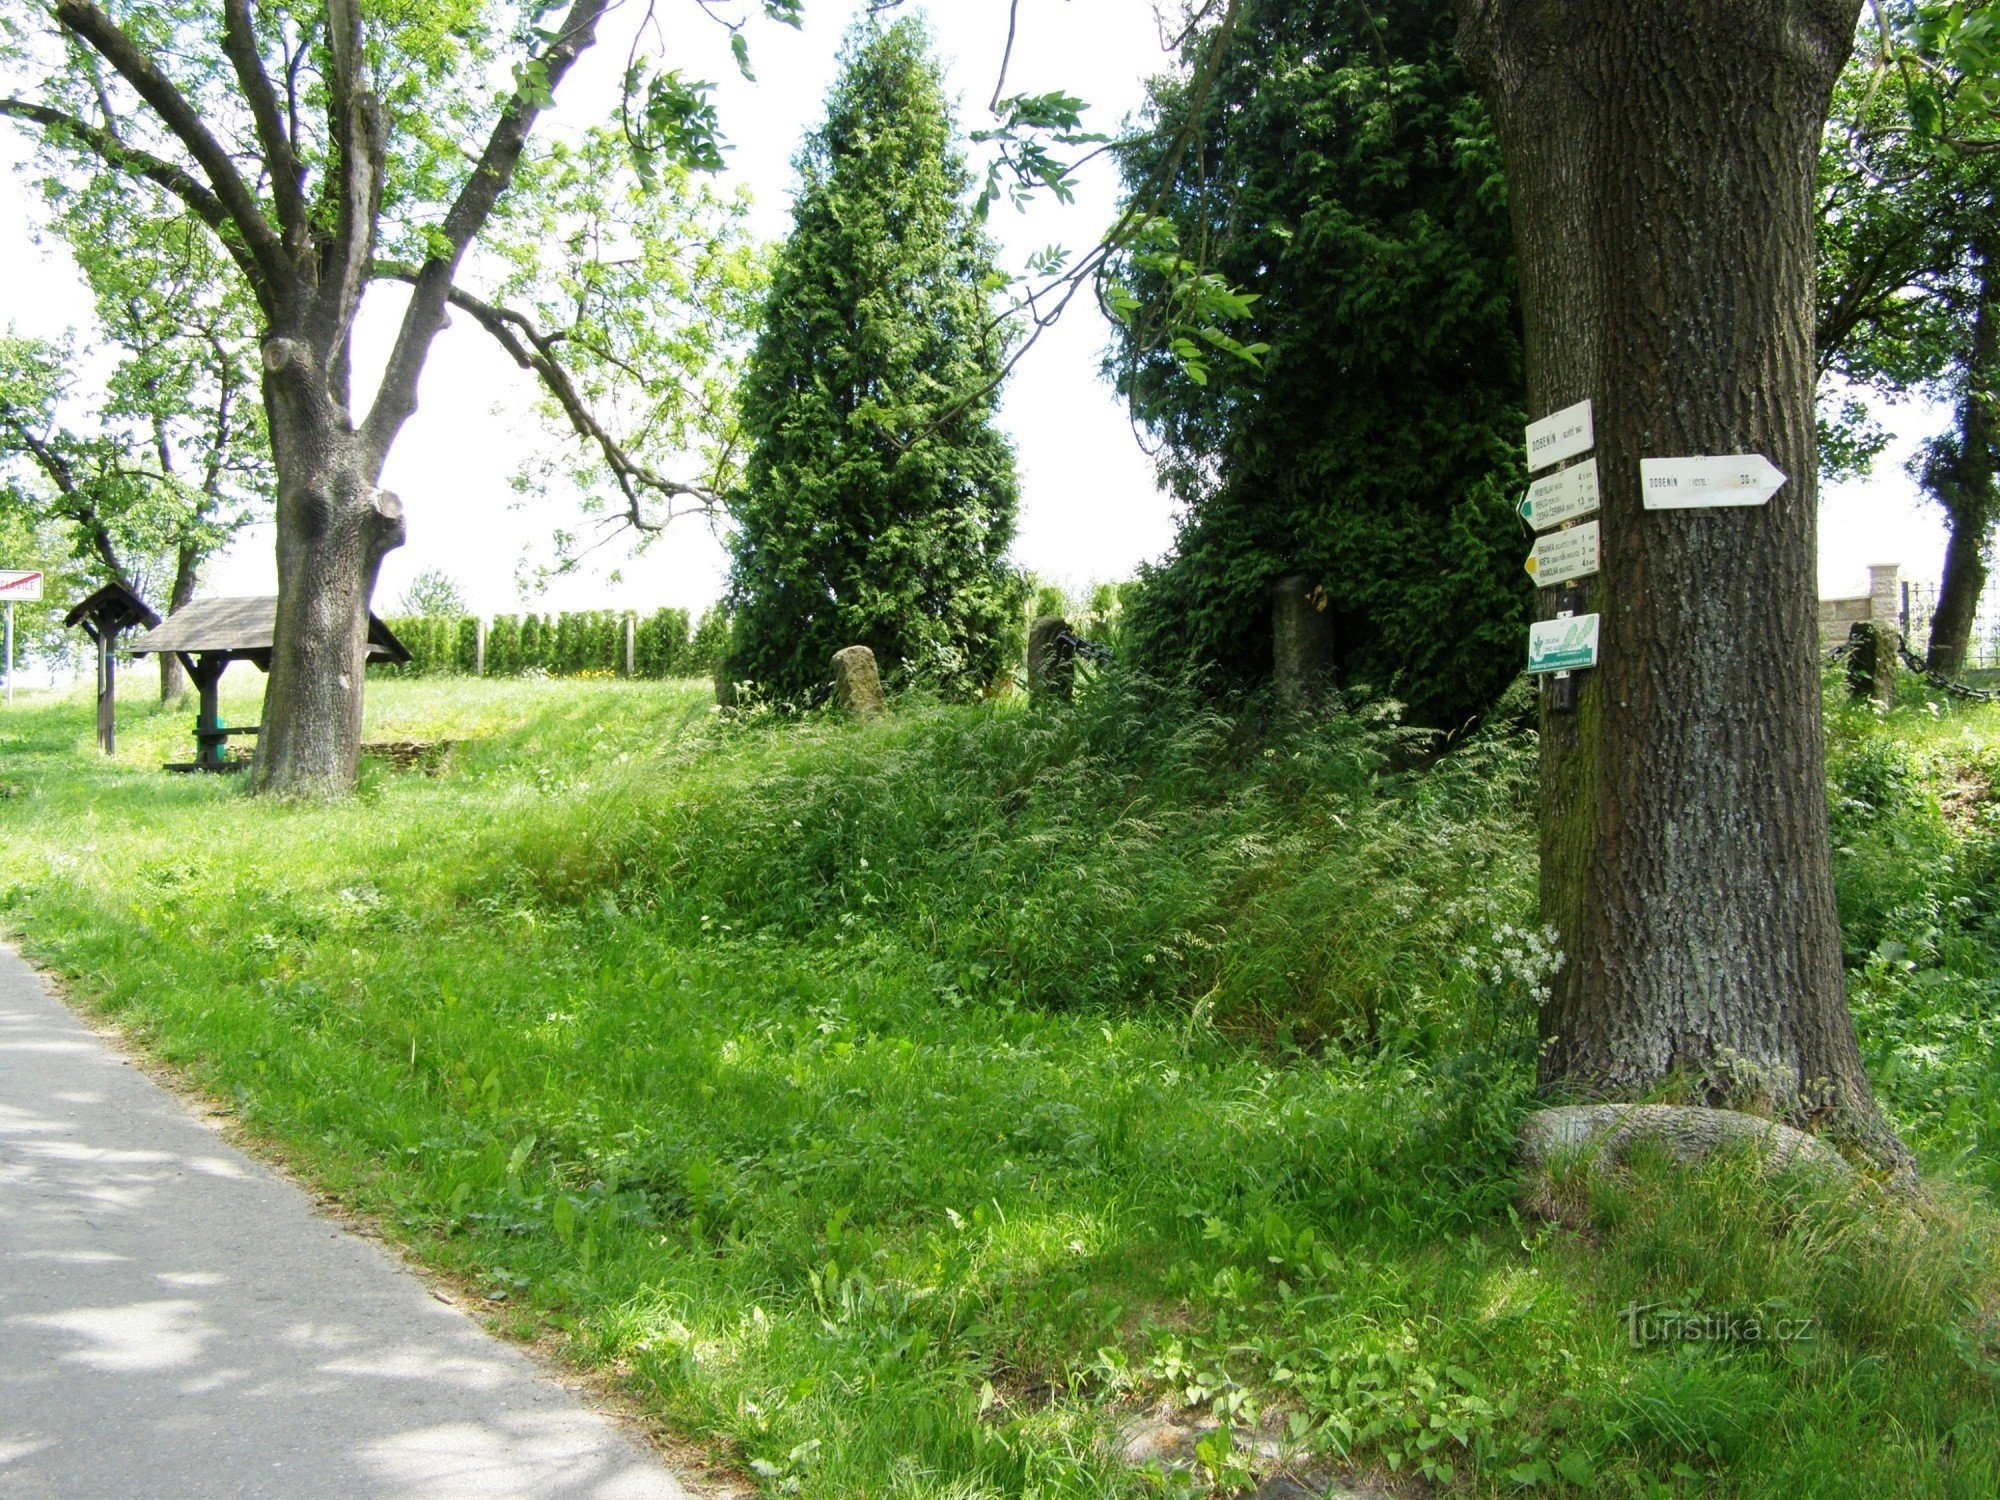 toeristisch kruispunt Dobenín (Václavice)